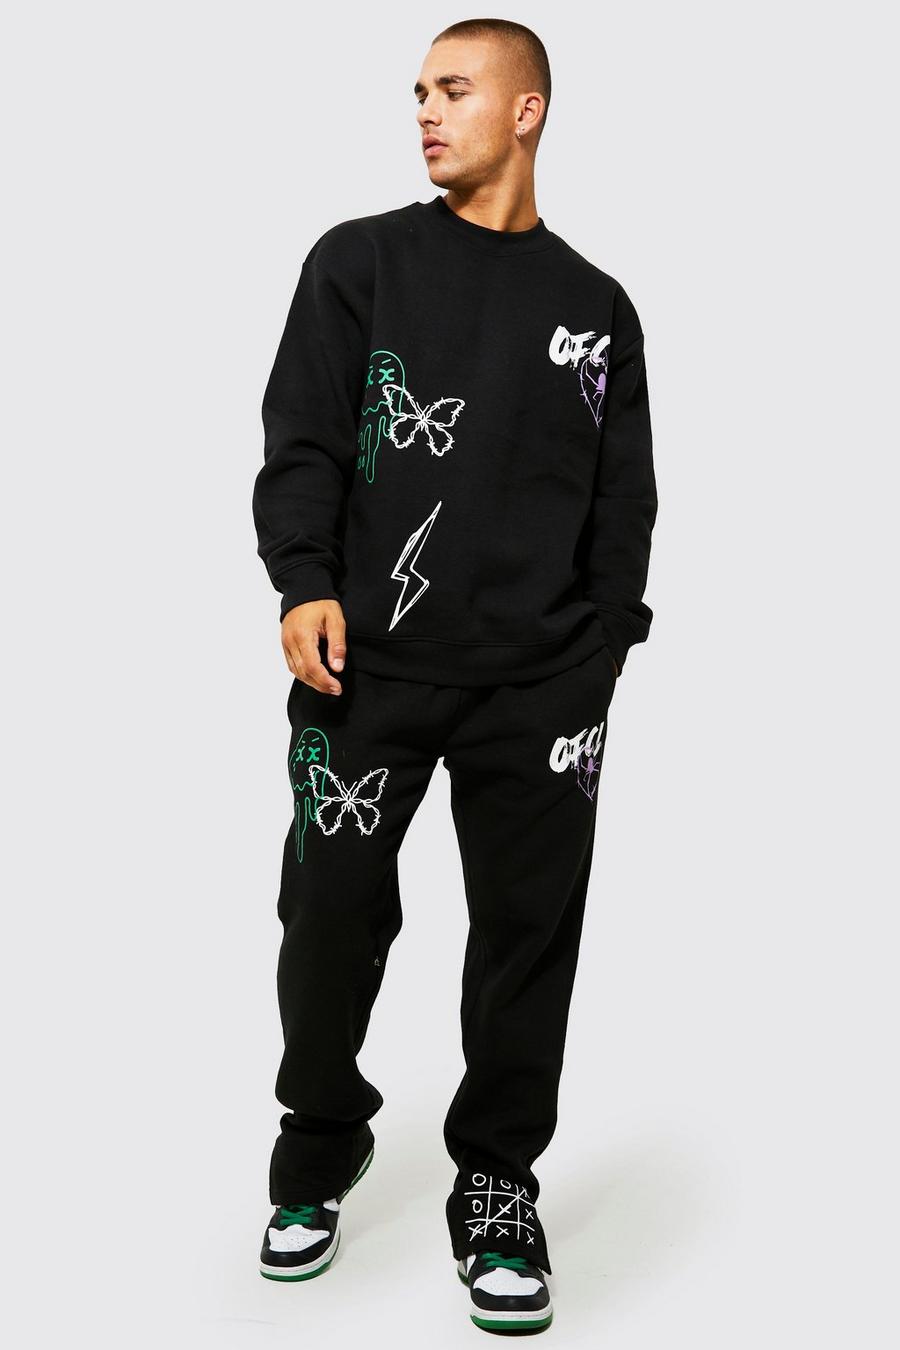 Black Oversized Ofcl Graffiti Sweatshirt Tracksuit